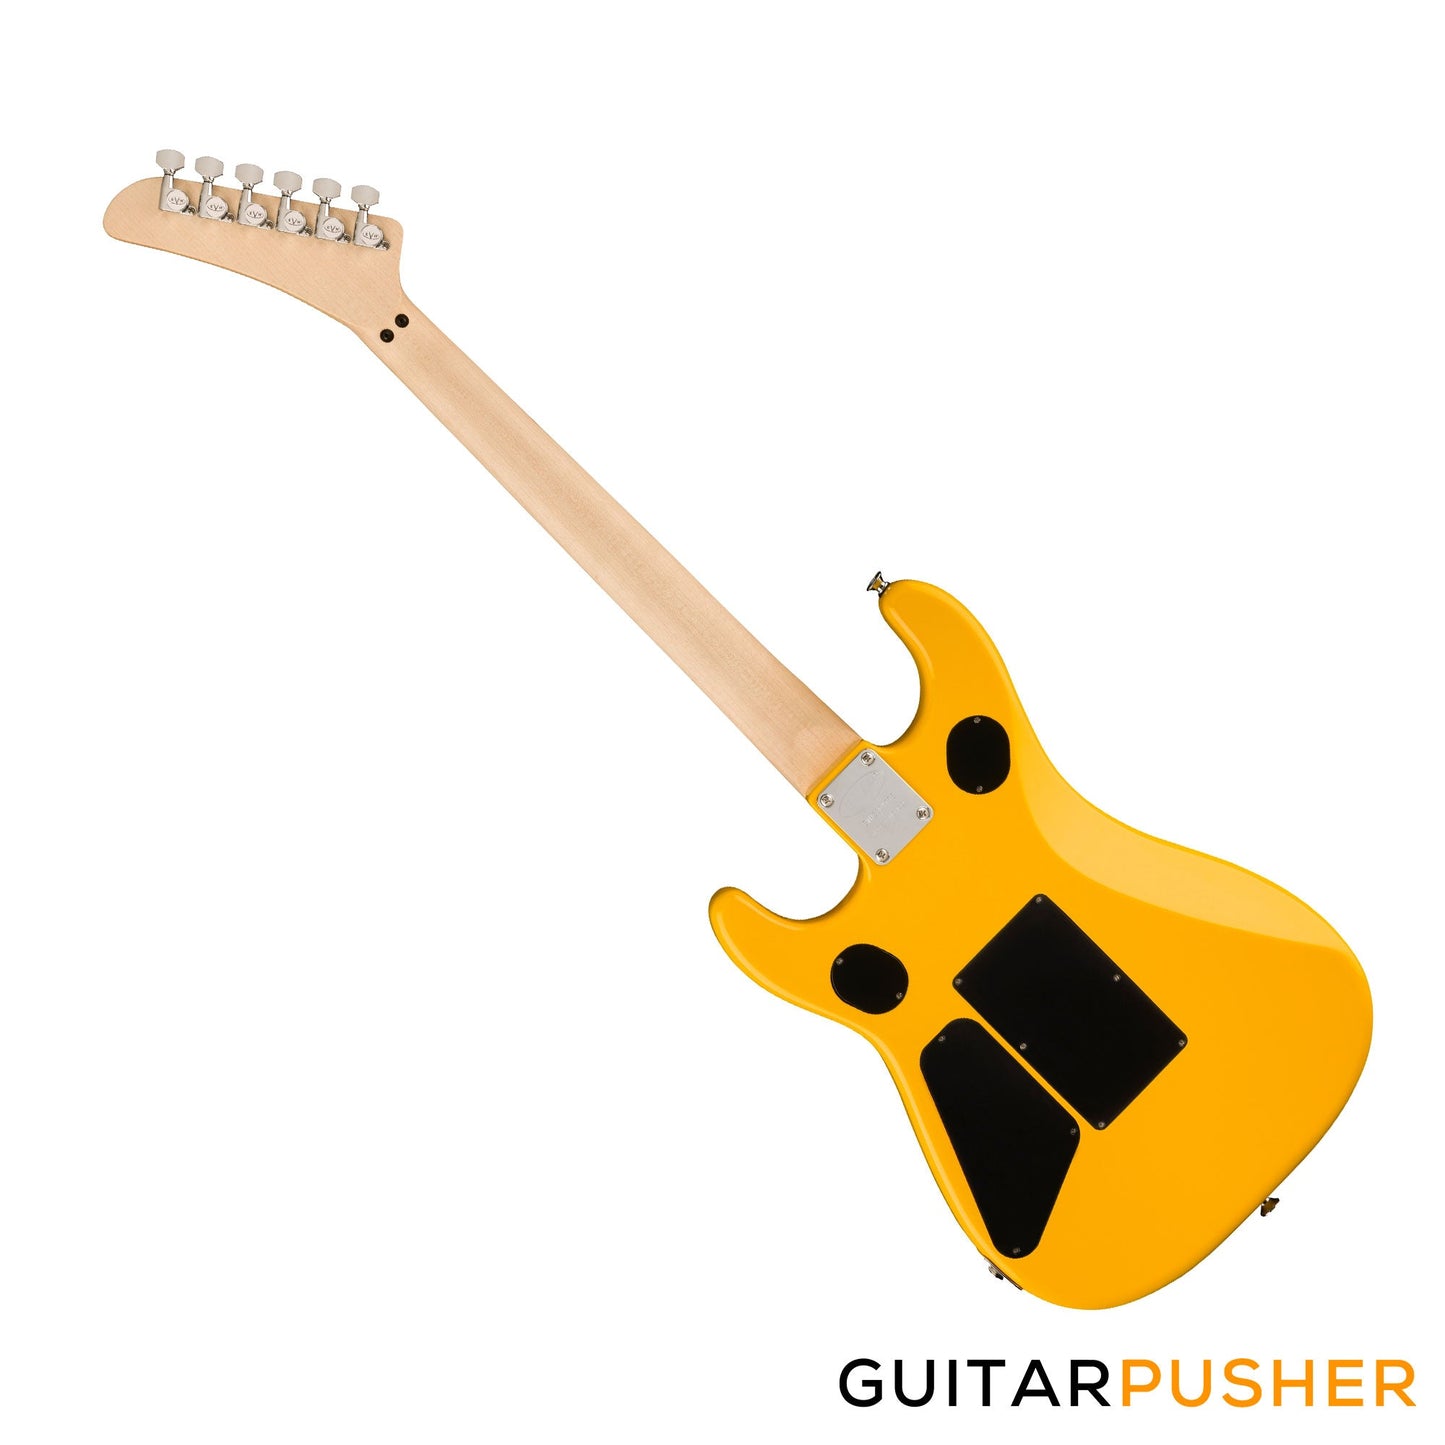 EVH 5150 Series Standard, Ebony Fretboard Electric Guitar - EVH Yellow